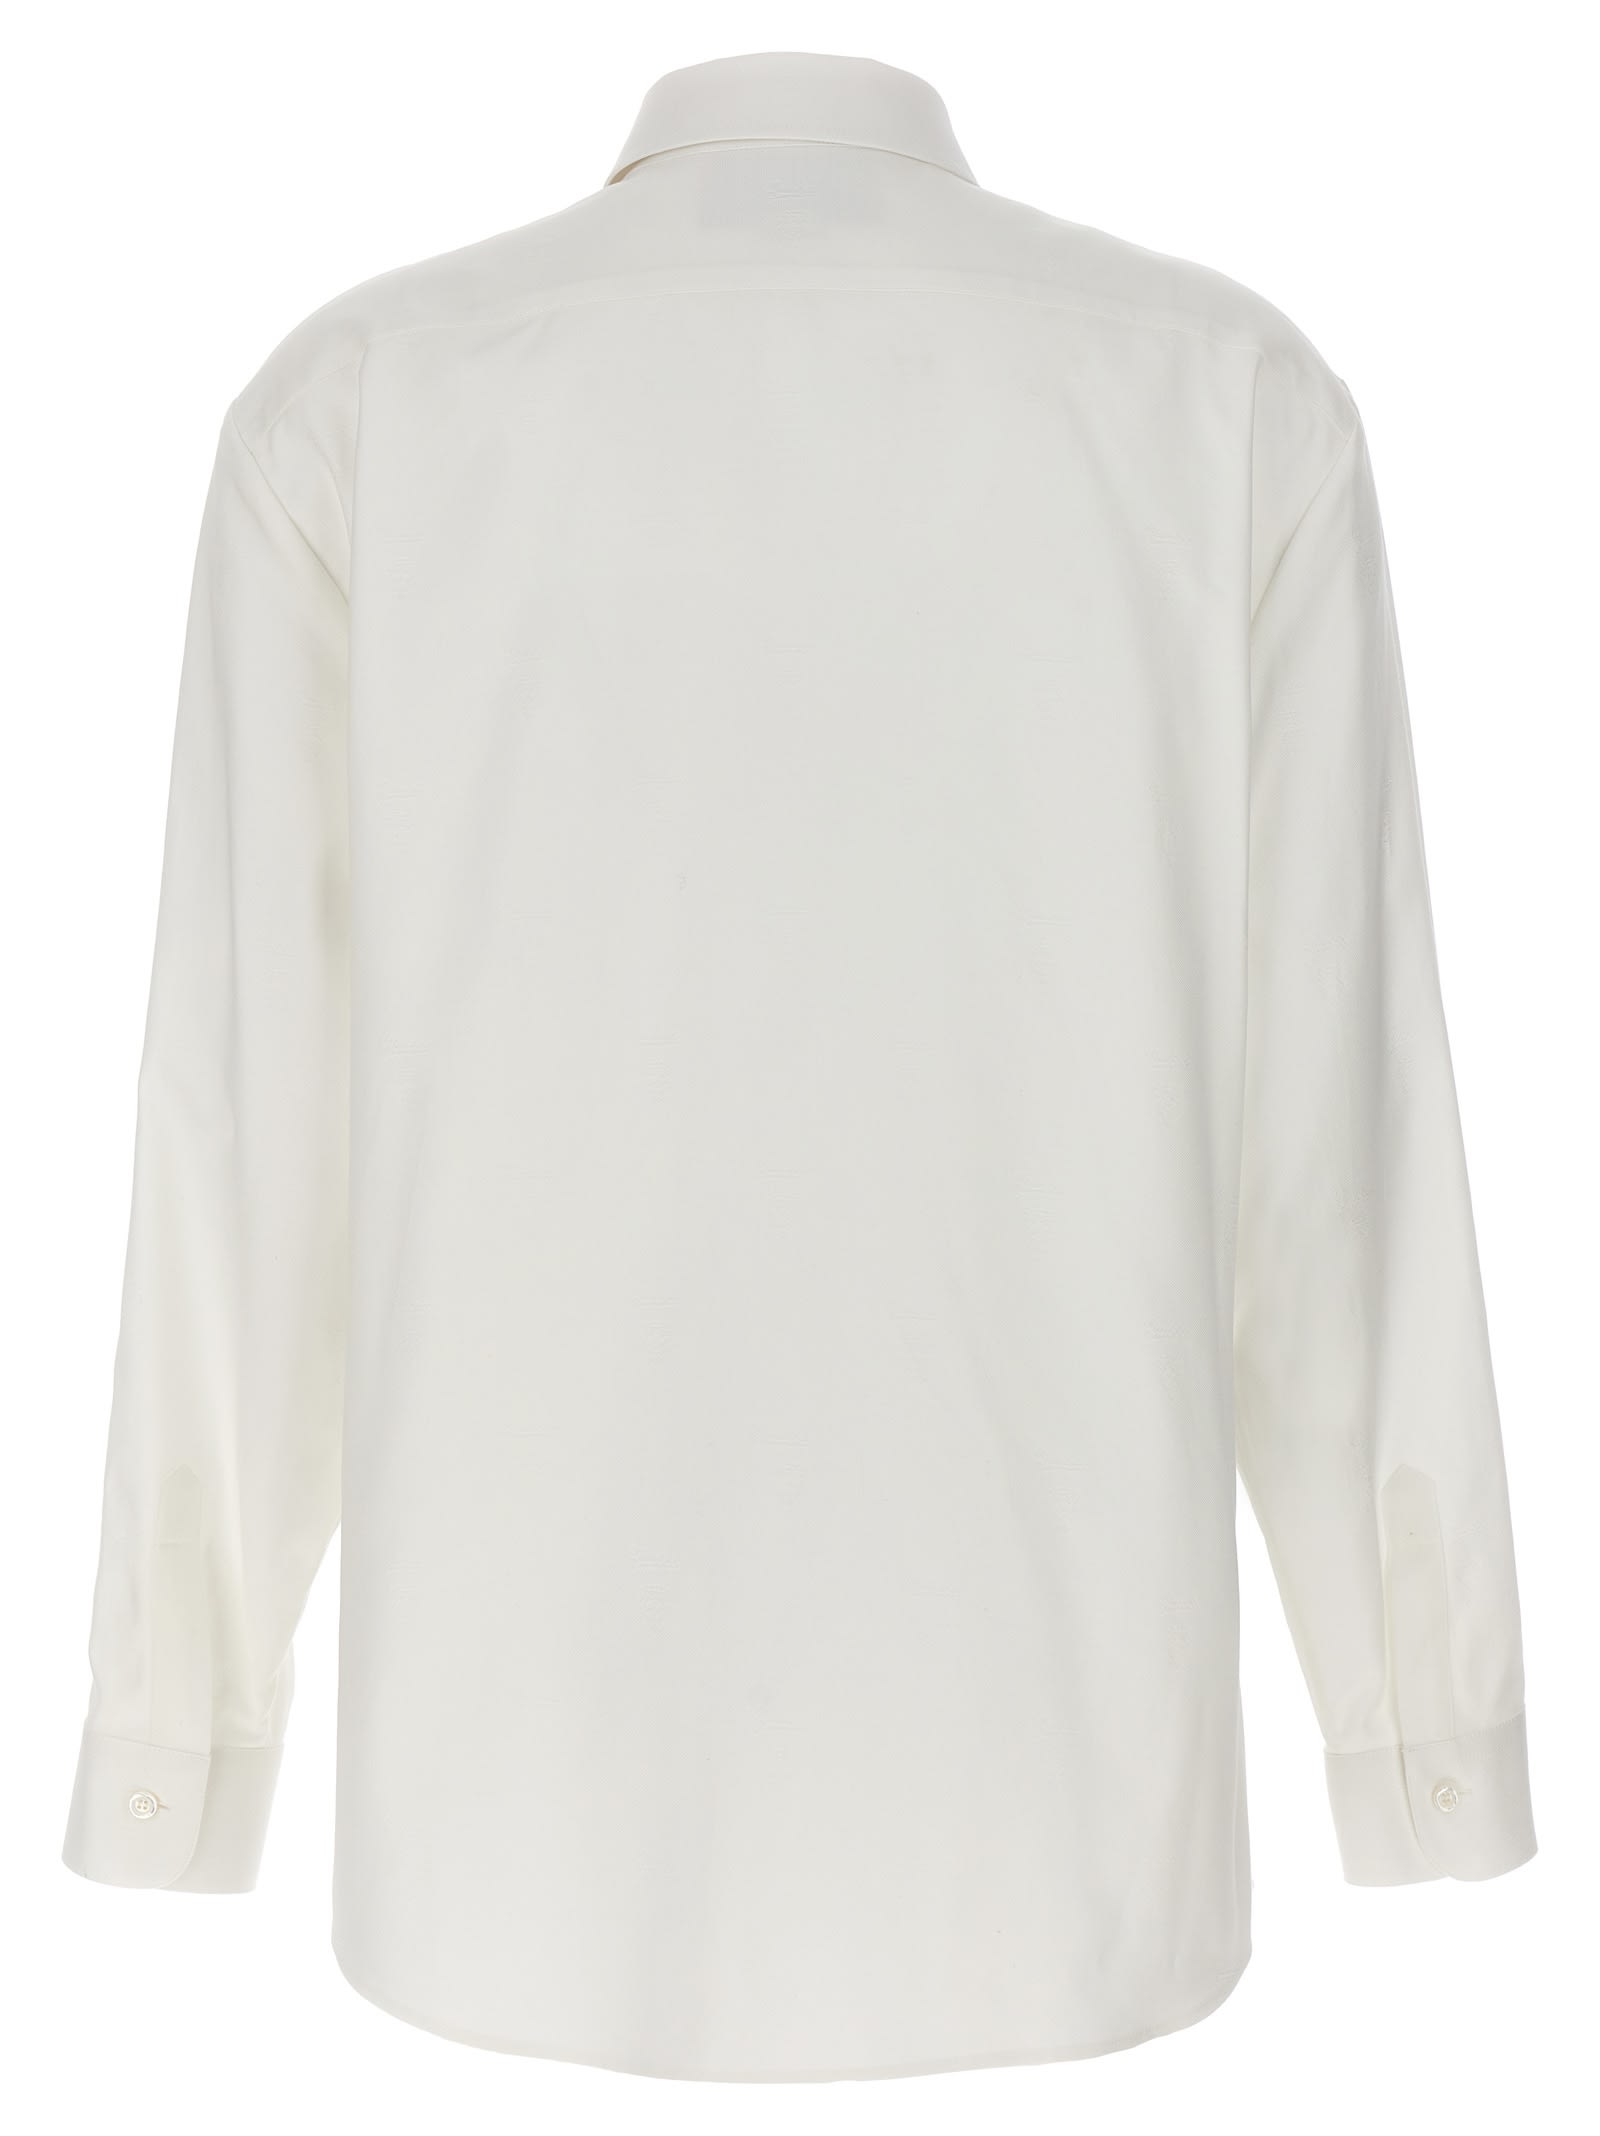 Shop Gucci Oxford Shirt In White